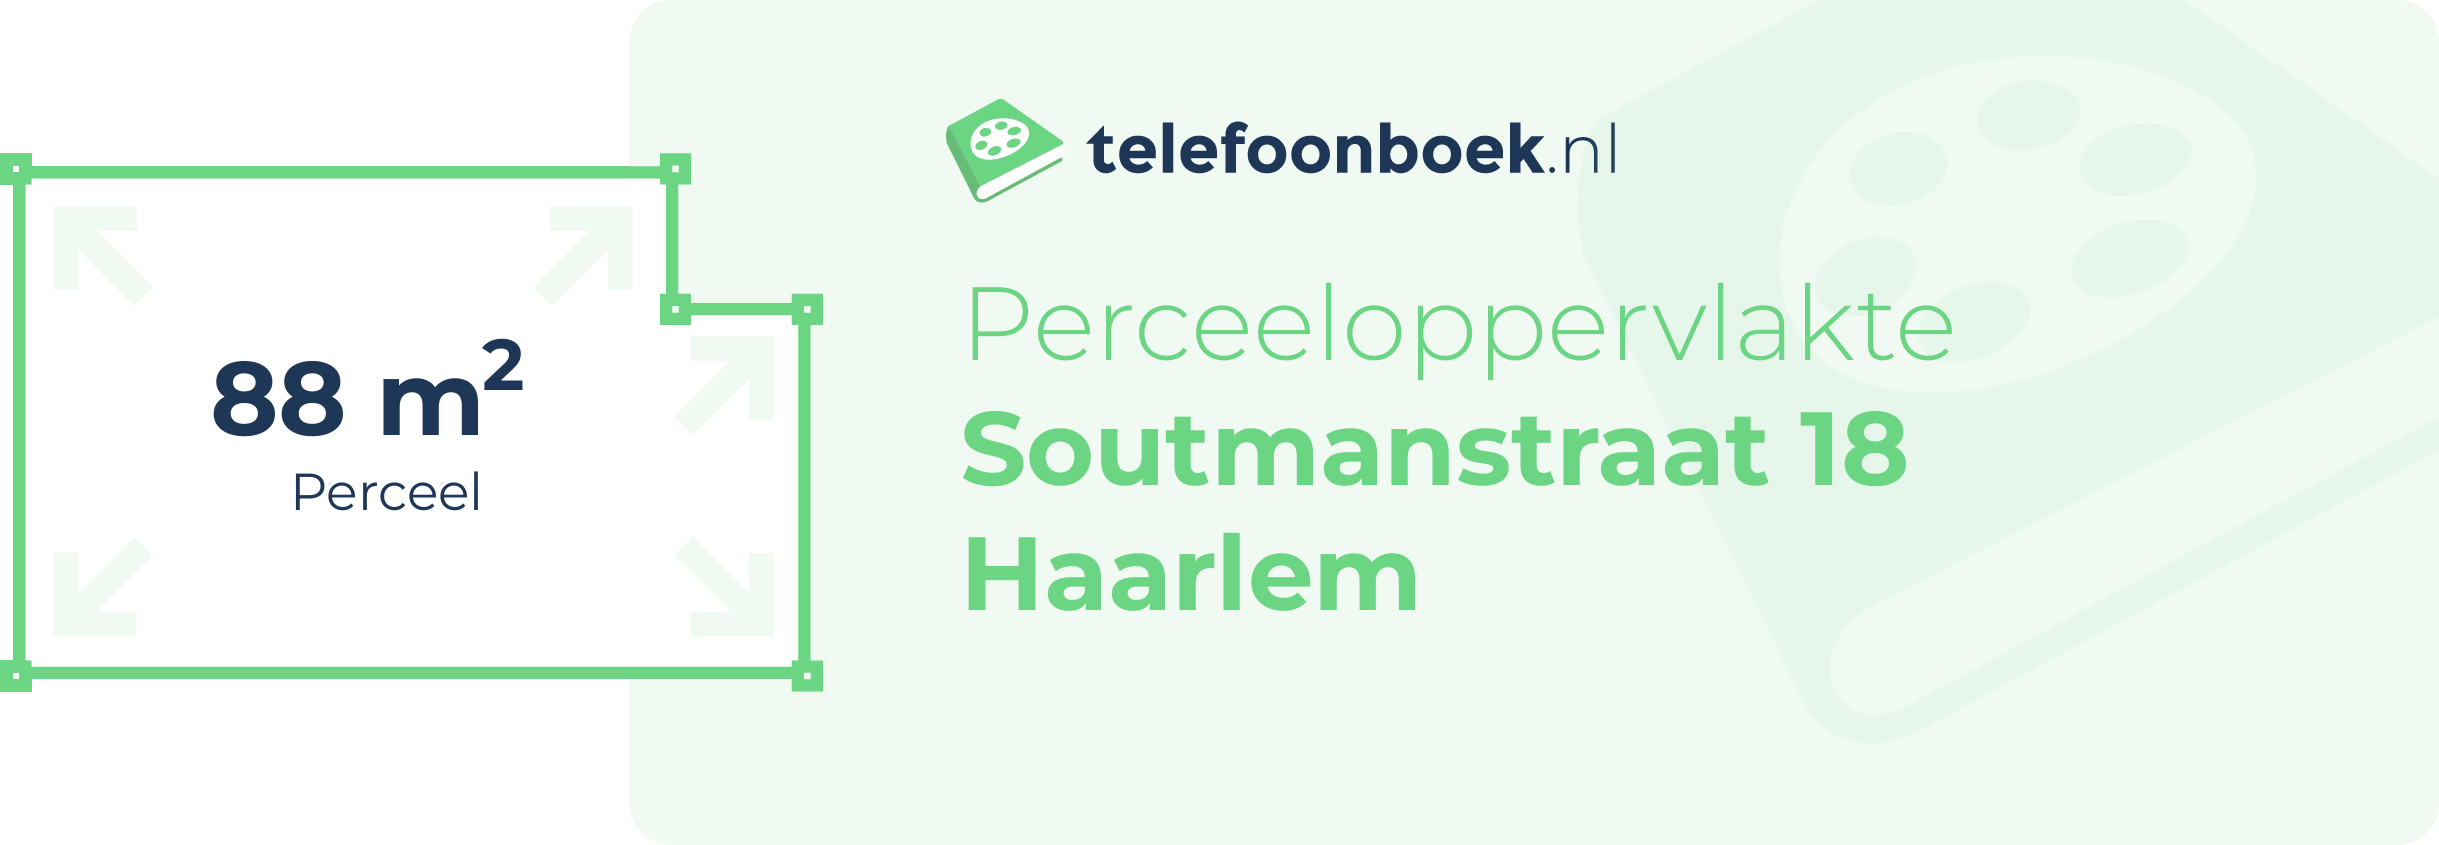 Perceeloppervlakte Soutmanstraat 18 Haarlem